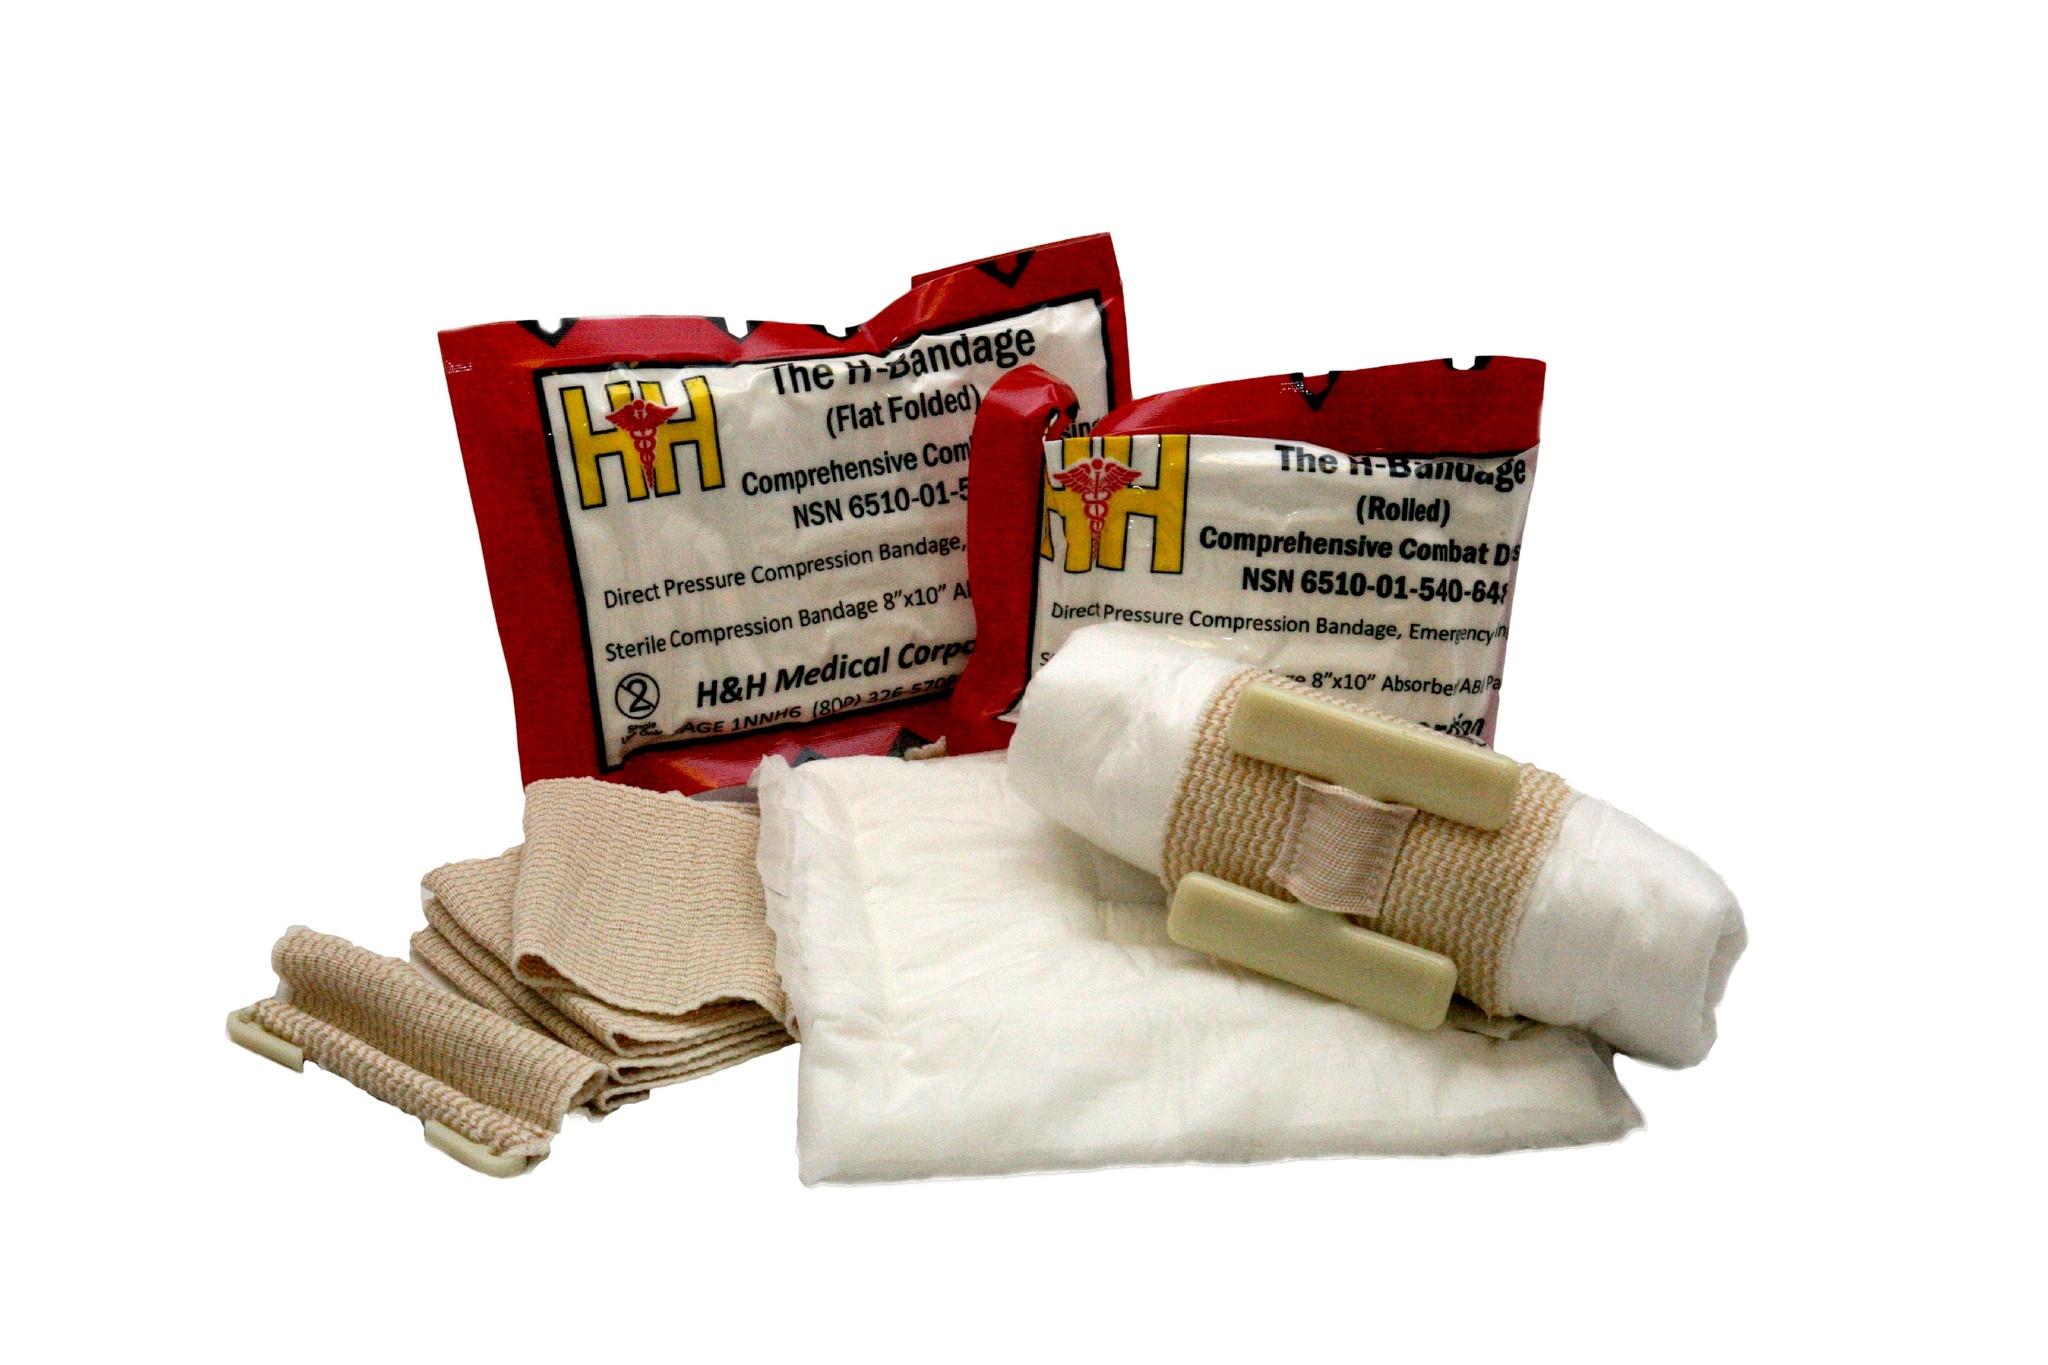 Bandage Compression Dressing H & H, Emergency bandáže, Hrudní krytí, Obvazy....: H&H H-Bandage Compression Dressing, Standard Fold